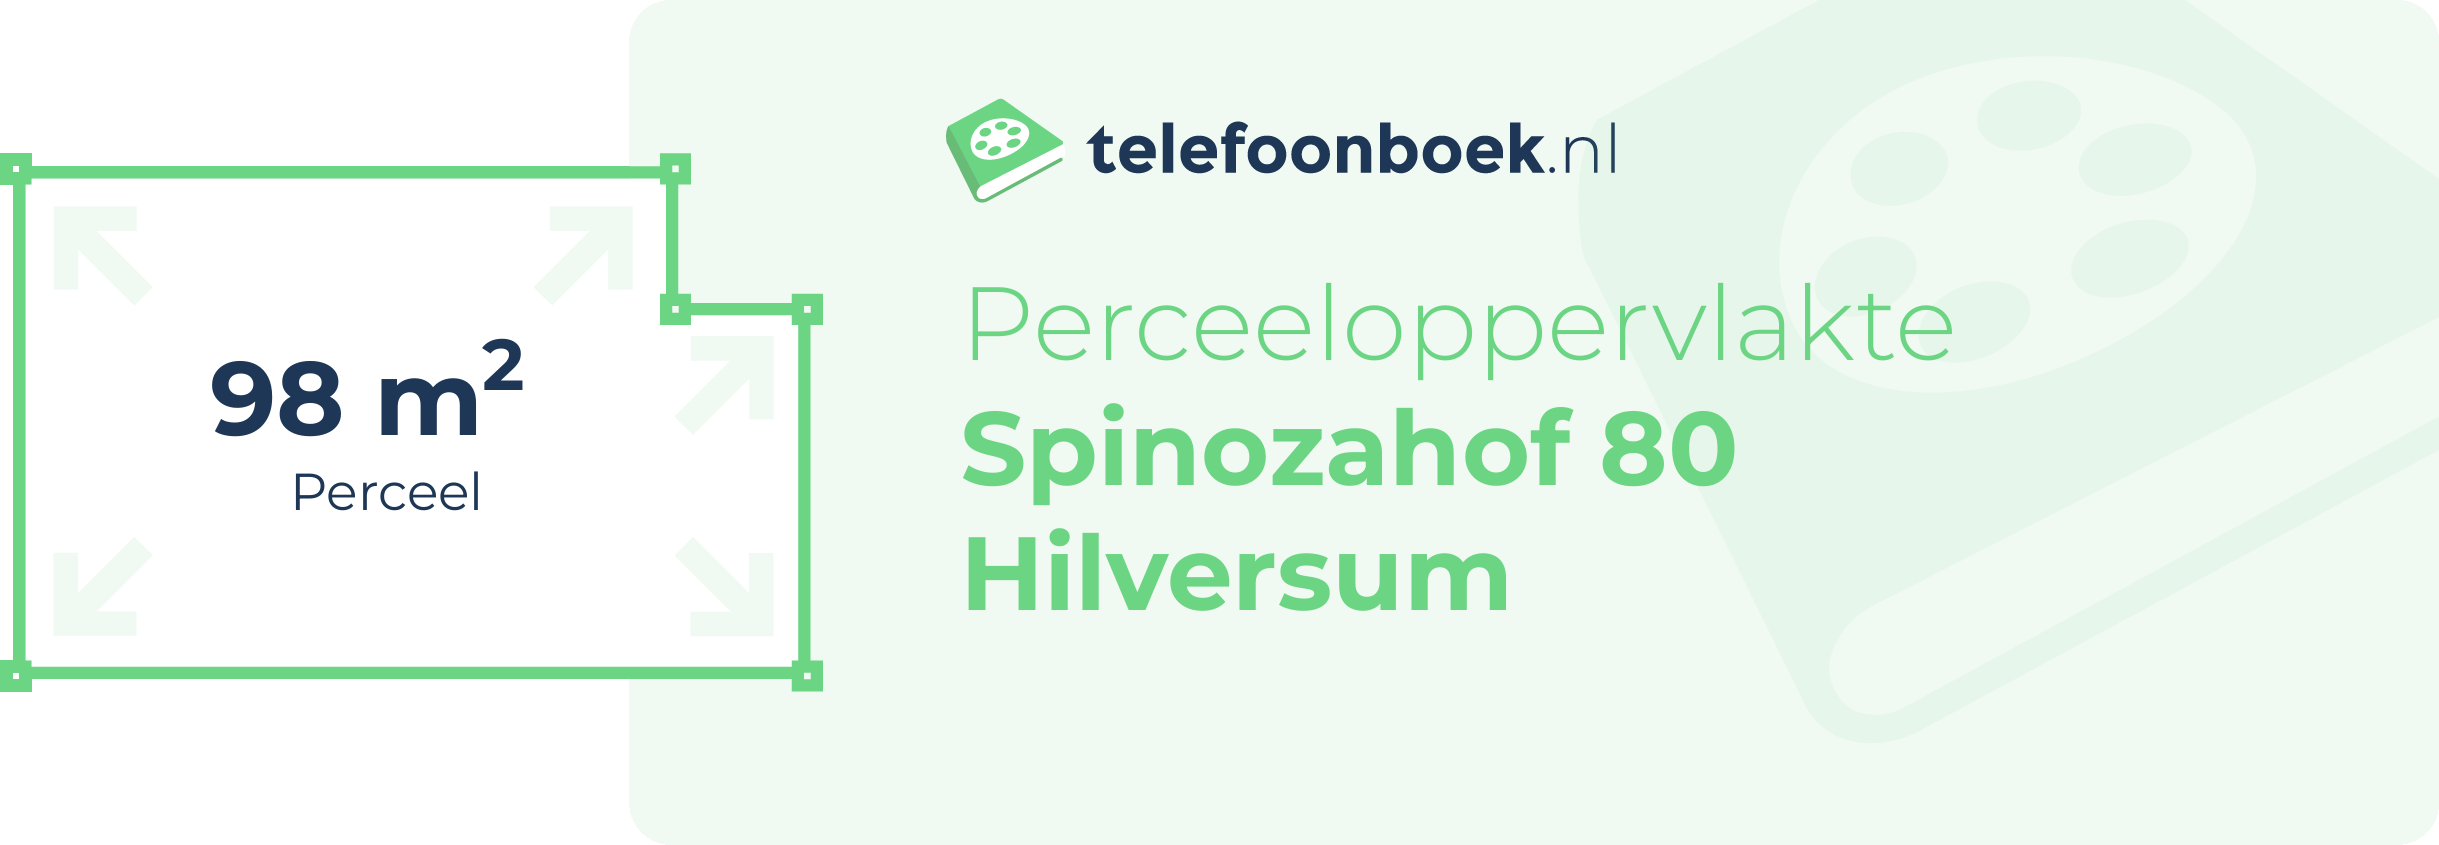 Perceeloppervlakte Spinozahof 80 Hilversum